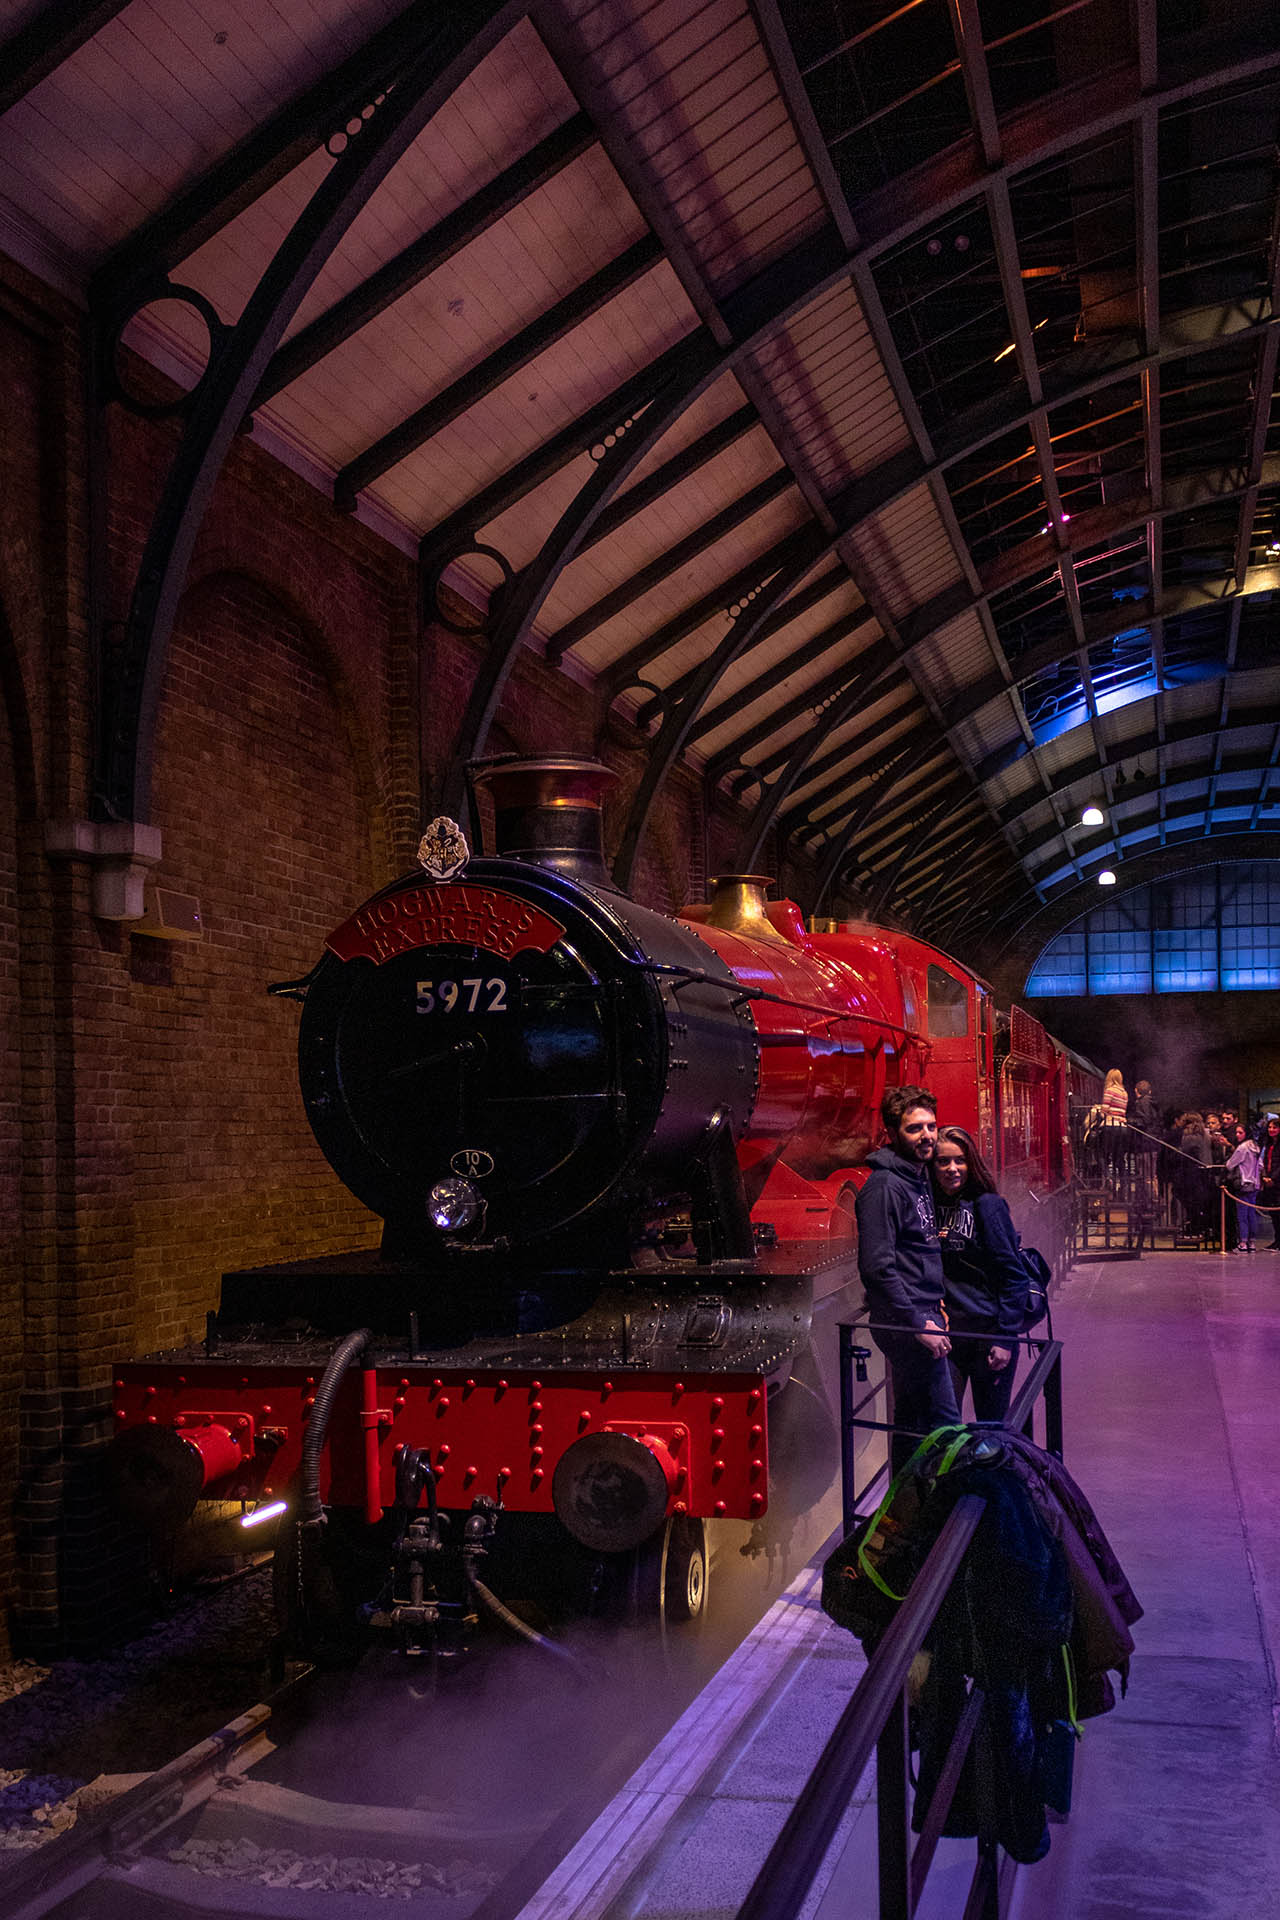 De Hogwarts Express op Platform 9 3/4 in de Studio Tour